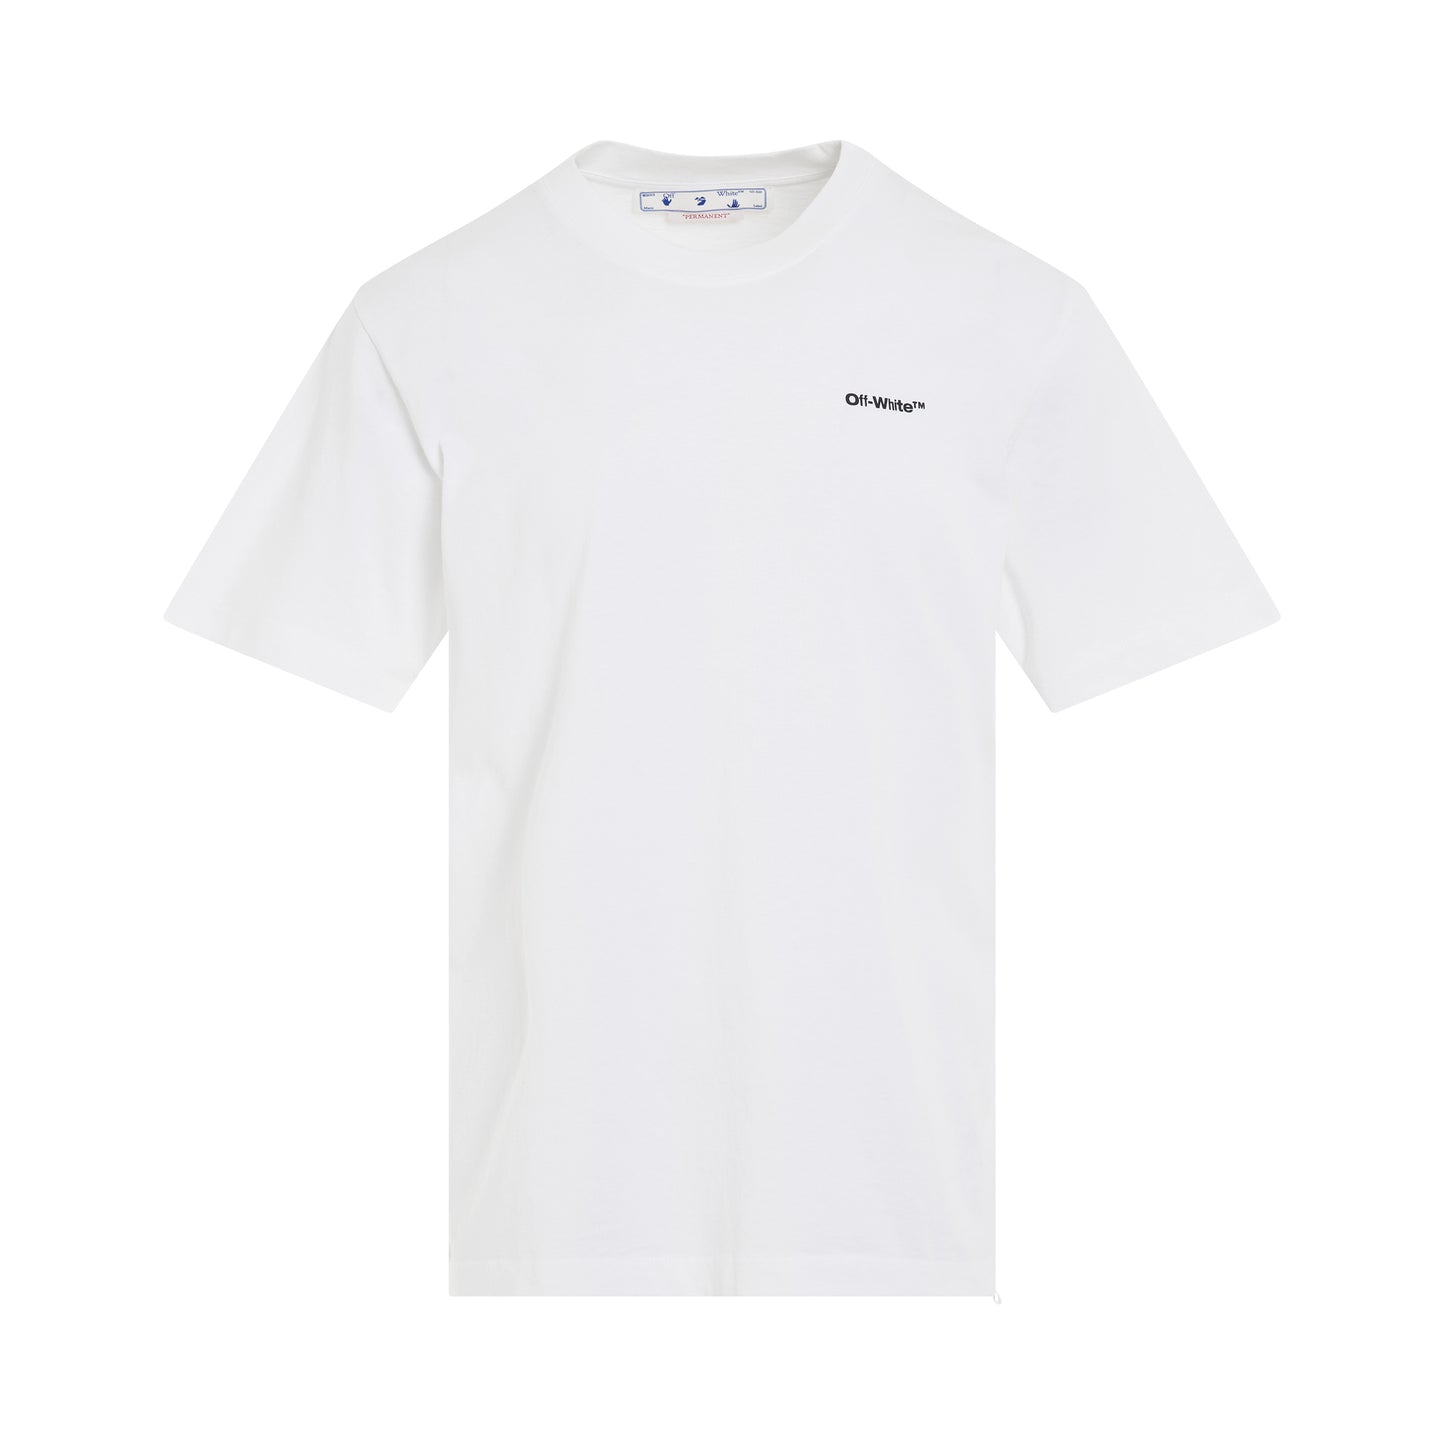 Wave Outline Diagonal Slim Fit T-Shirt in White/Black